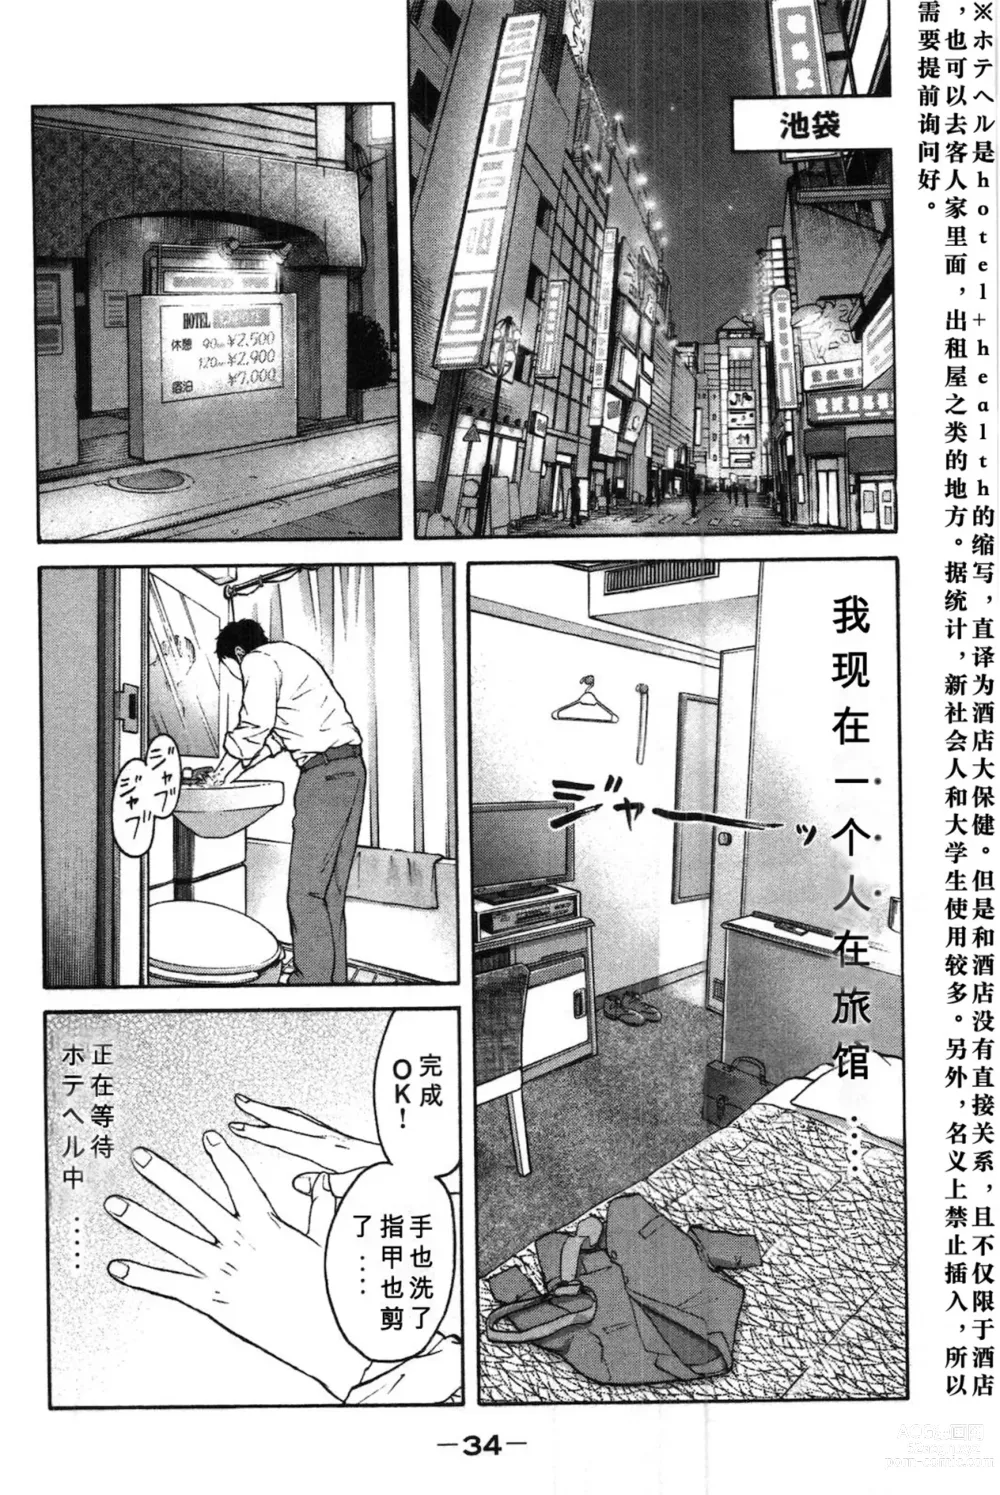 Page 3 of manga Tokumei no Kanojo-tachi Vol. 1 Ch. 2